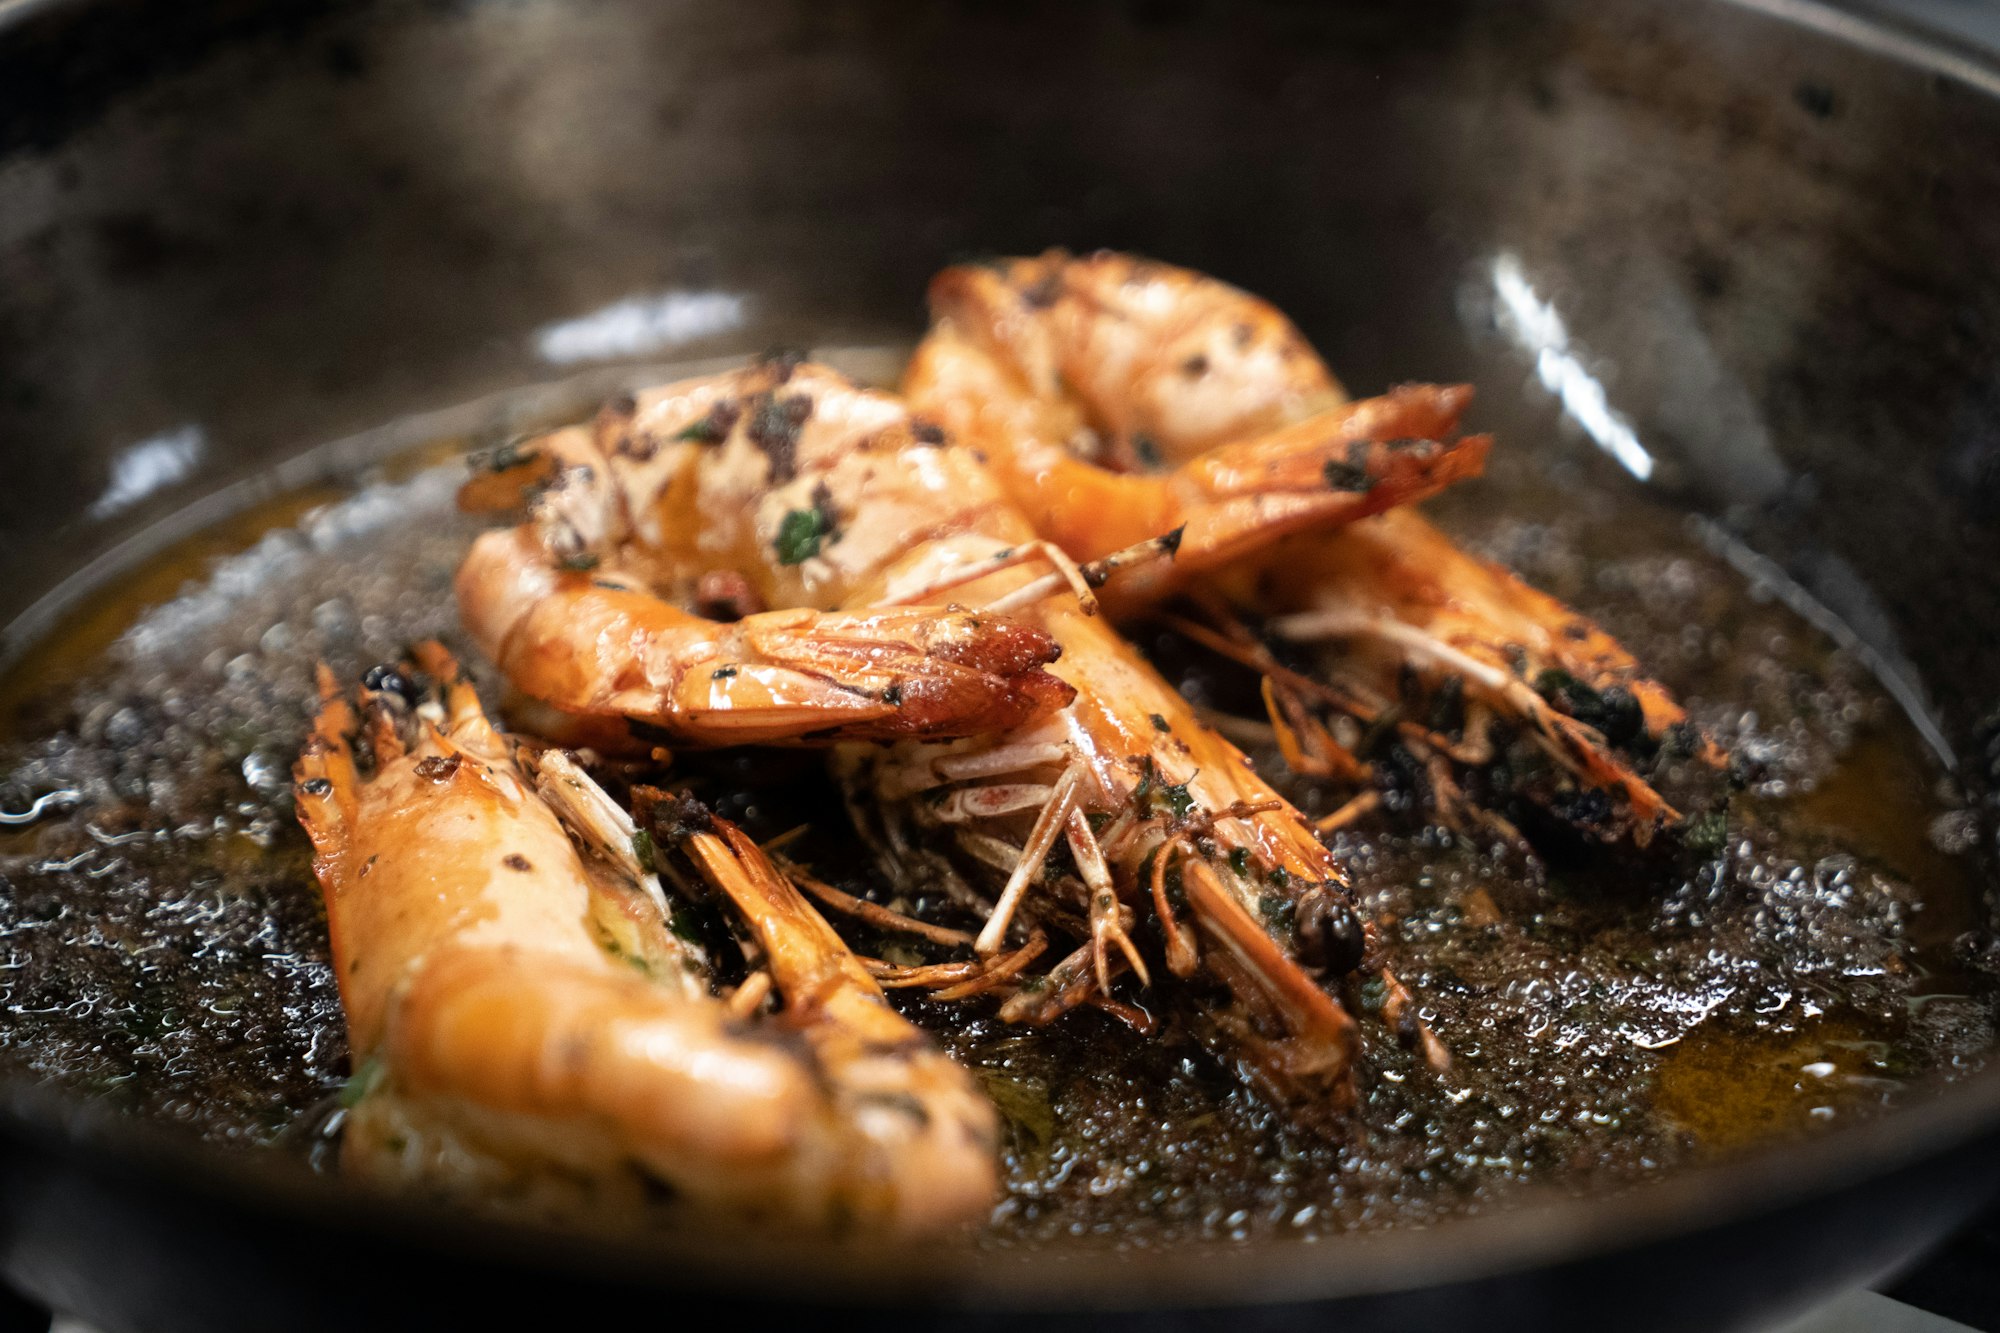 Some shrimps in a pan, freshly prepared for dinner.